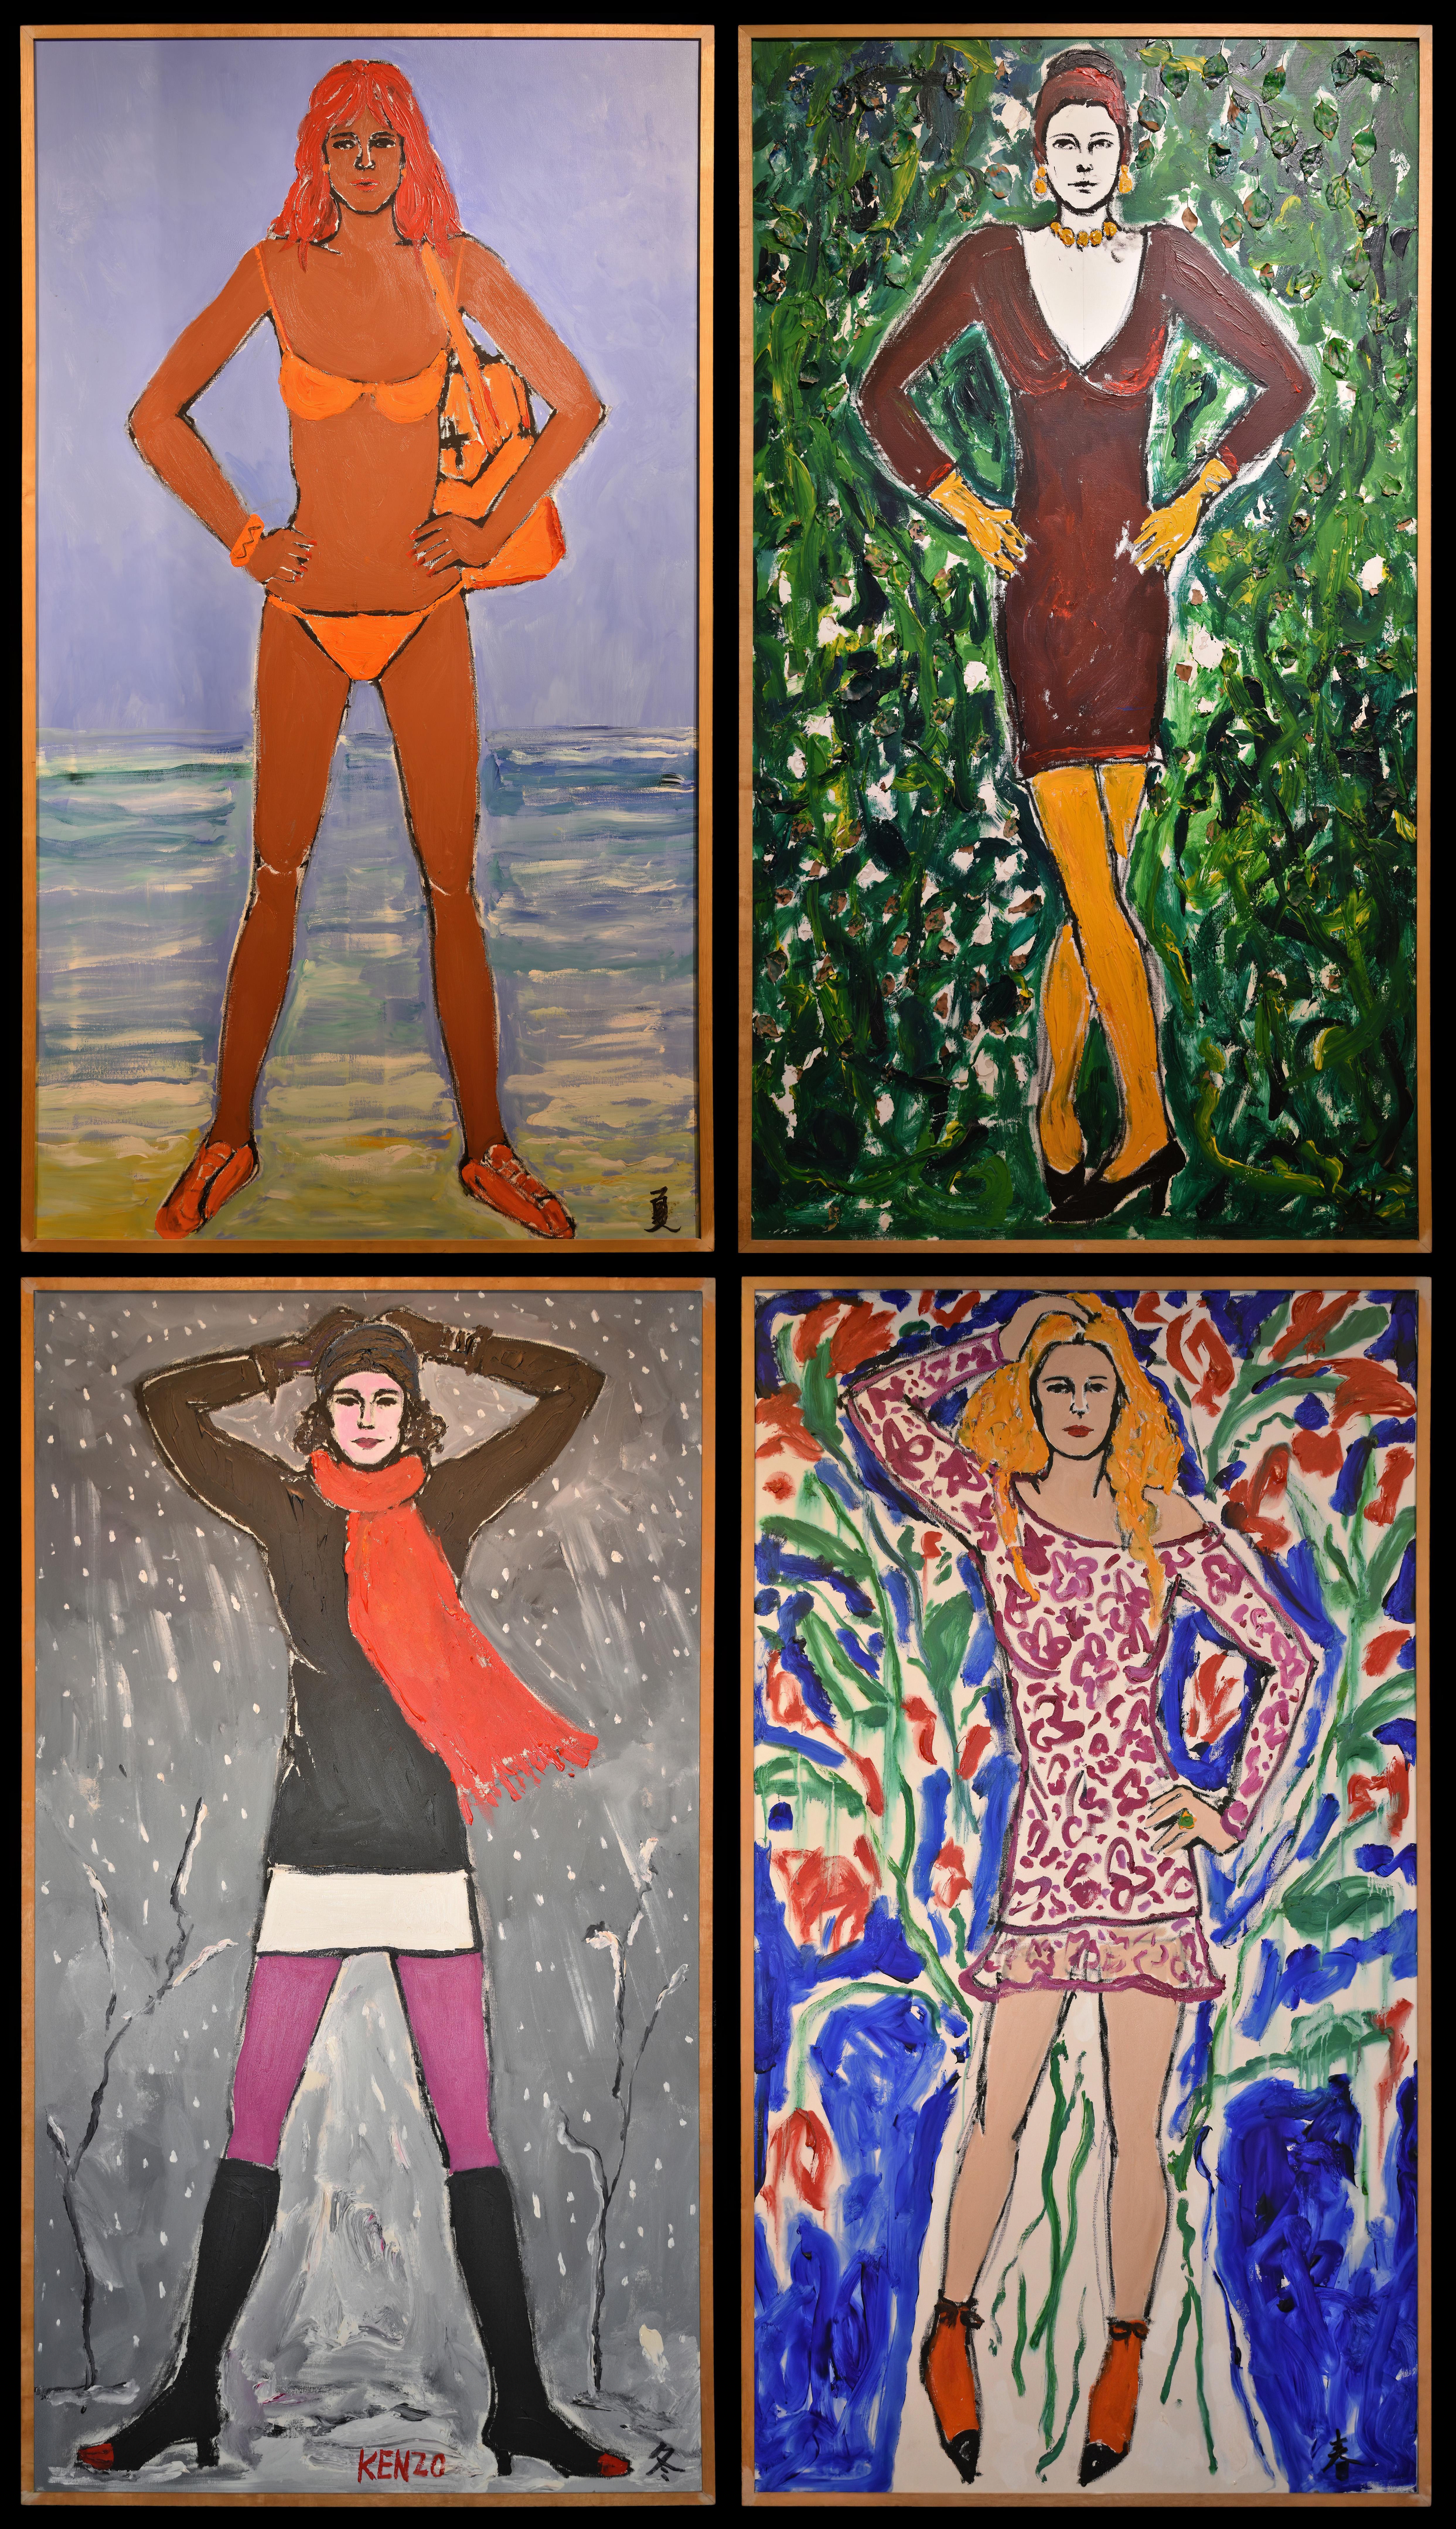 The four seasons. 4 big portraits of women by fashion designer Kenzo